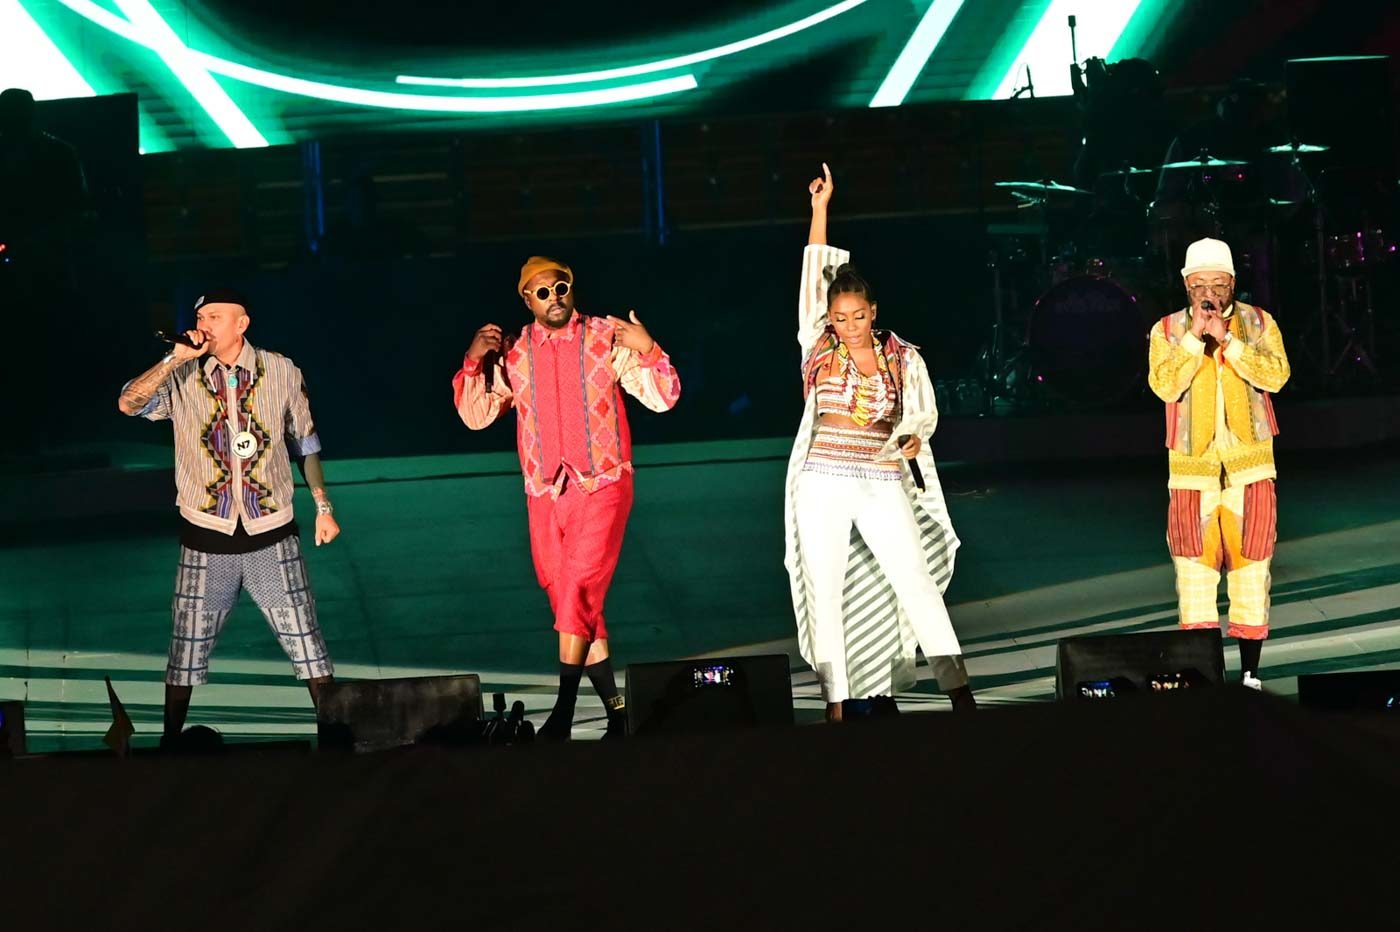 IN PHOTOS: Black Eyed Peas, Arnel Pineda perform at SEA Games 2019 closing